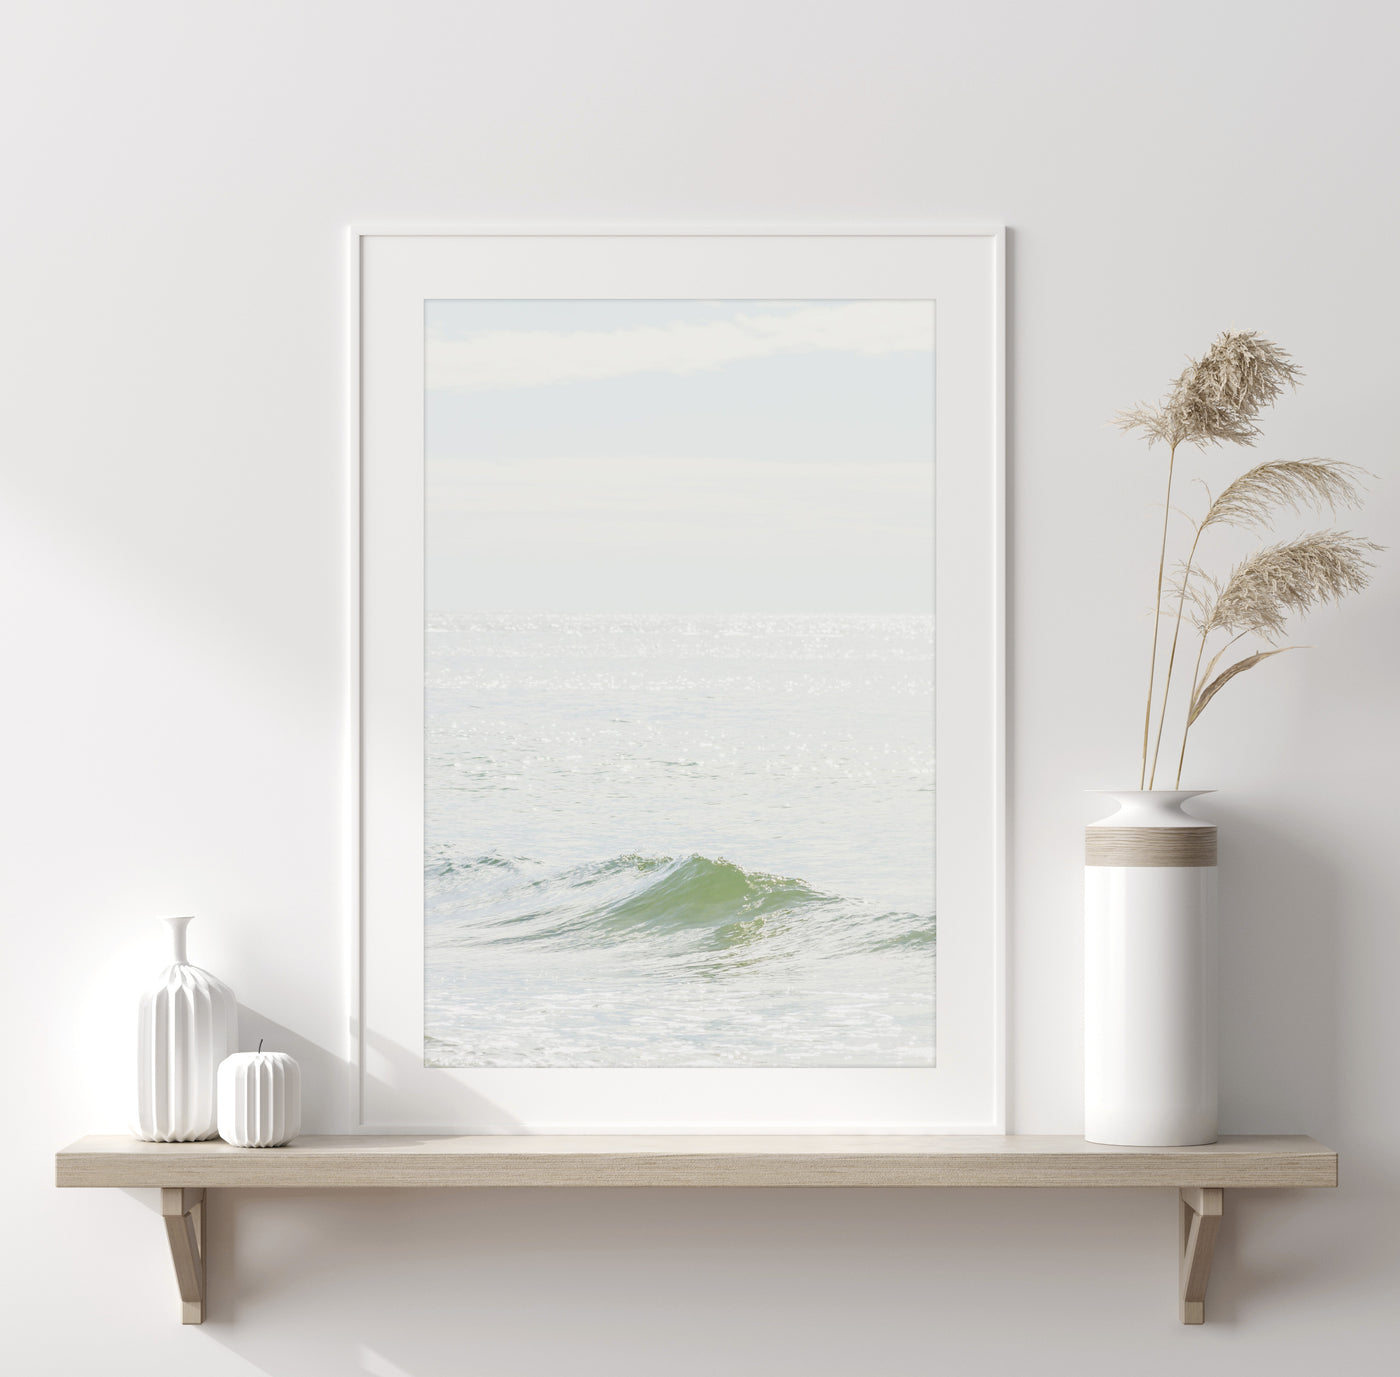 Ocean Wave No 4 - Fine art print by Cattie Coyle Photography